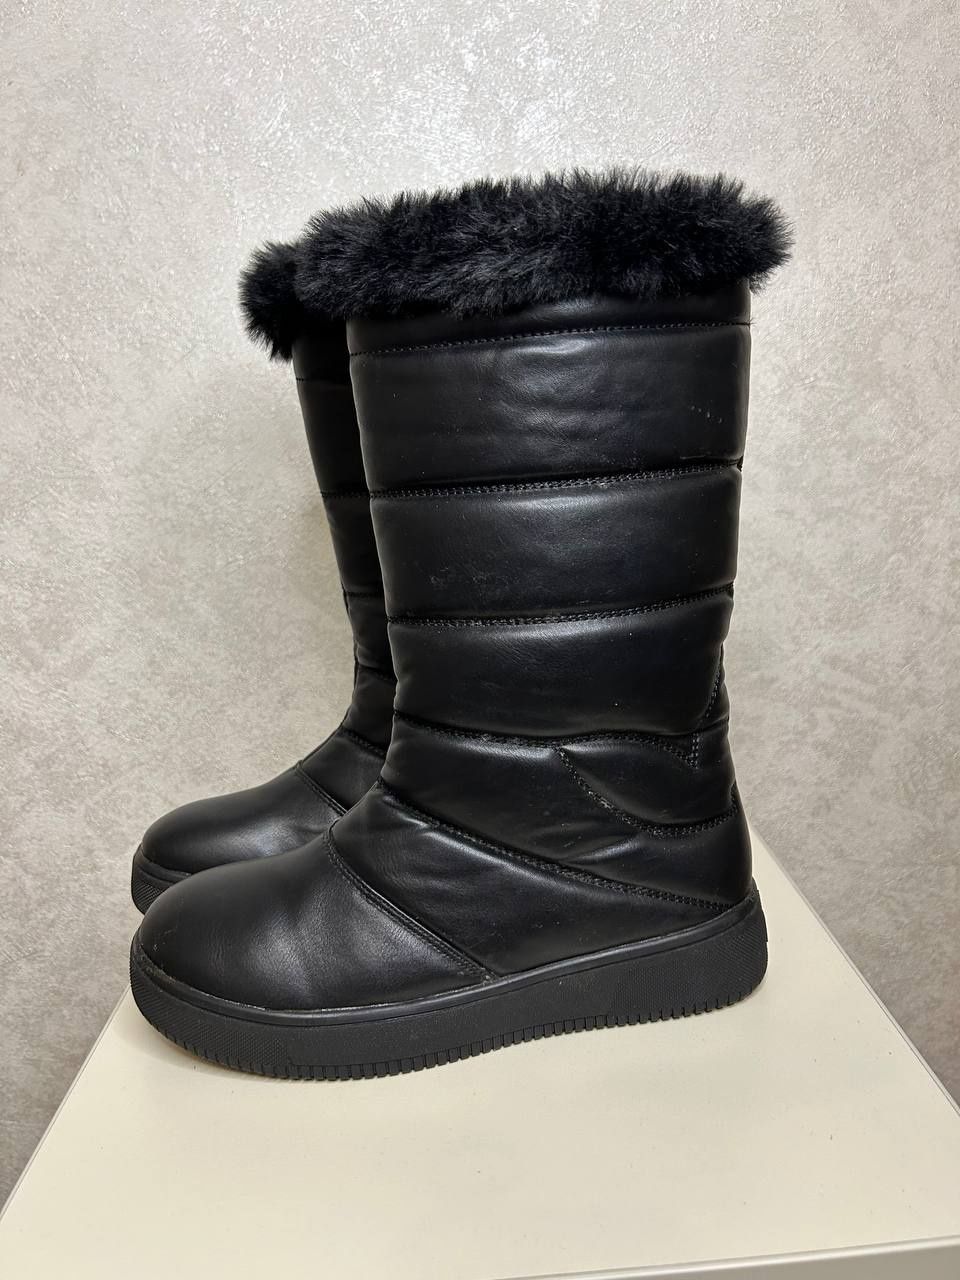 Женские зимние ботинки сапоги на меху размер 36